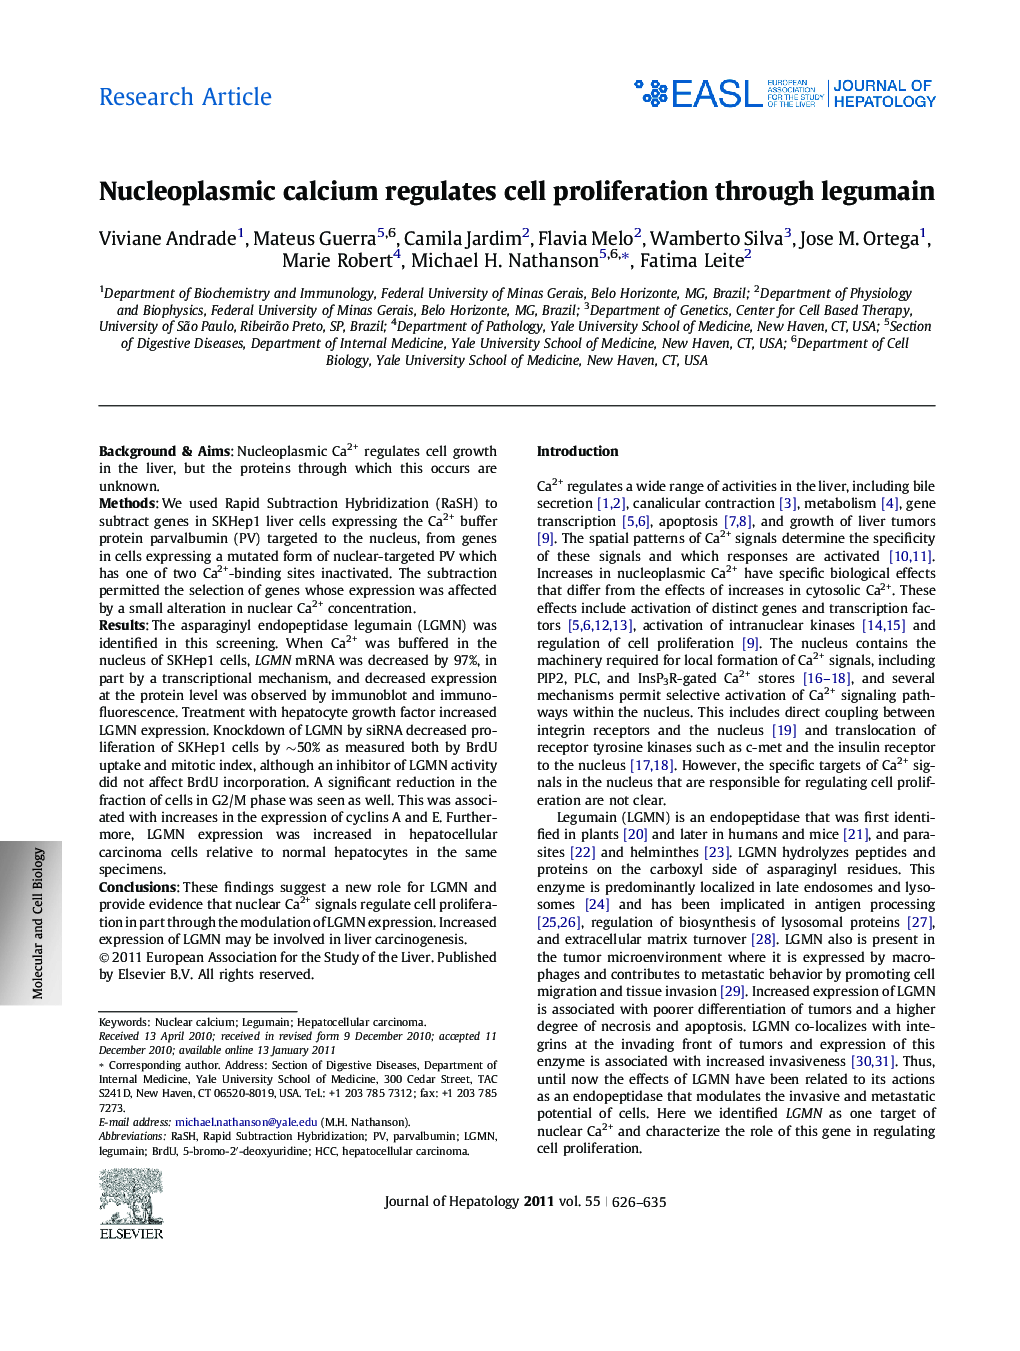 Research ArticleNucleoplasmic calcium regulates cell proliferation through legumain